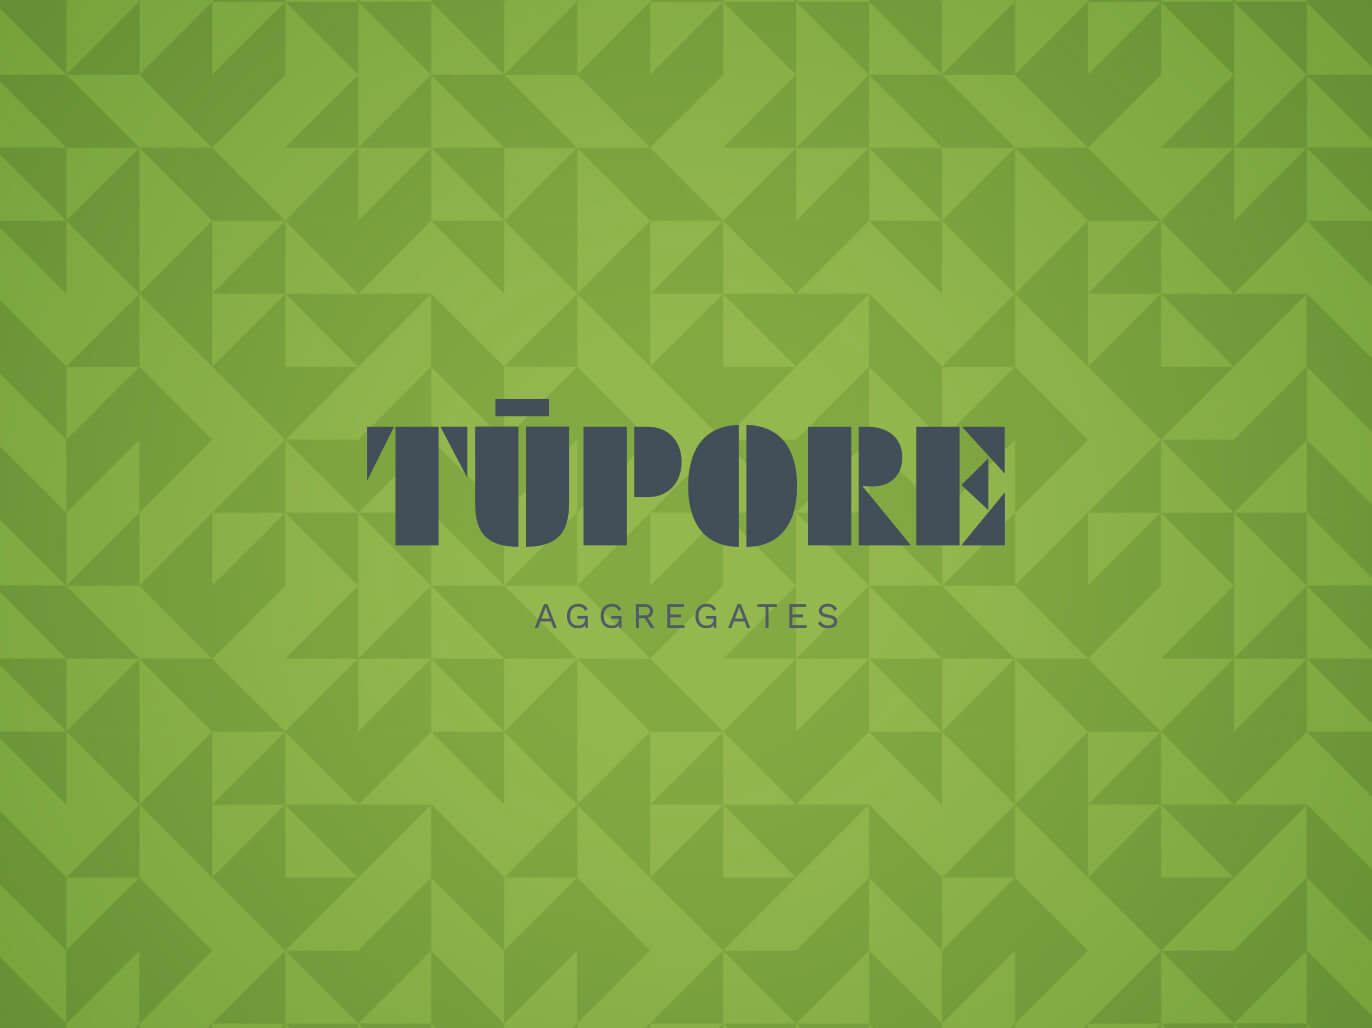 Many-Hats-Tupore-infrastructure-aggrgates-logo